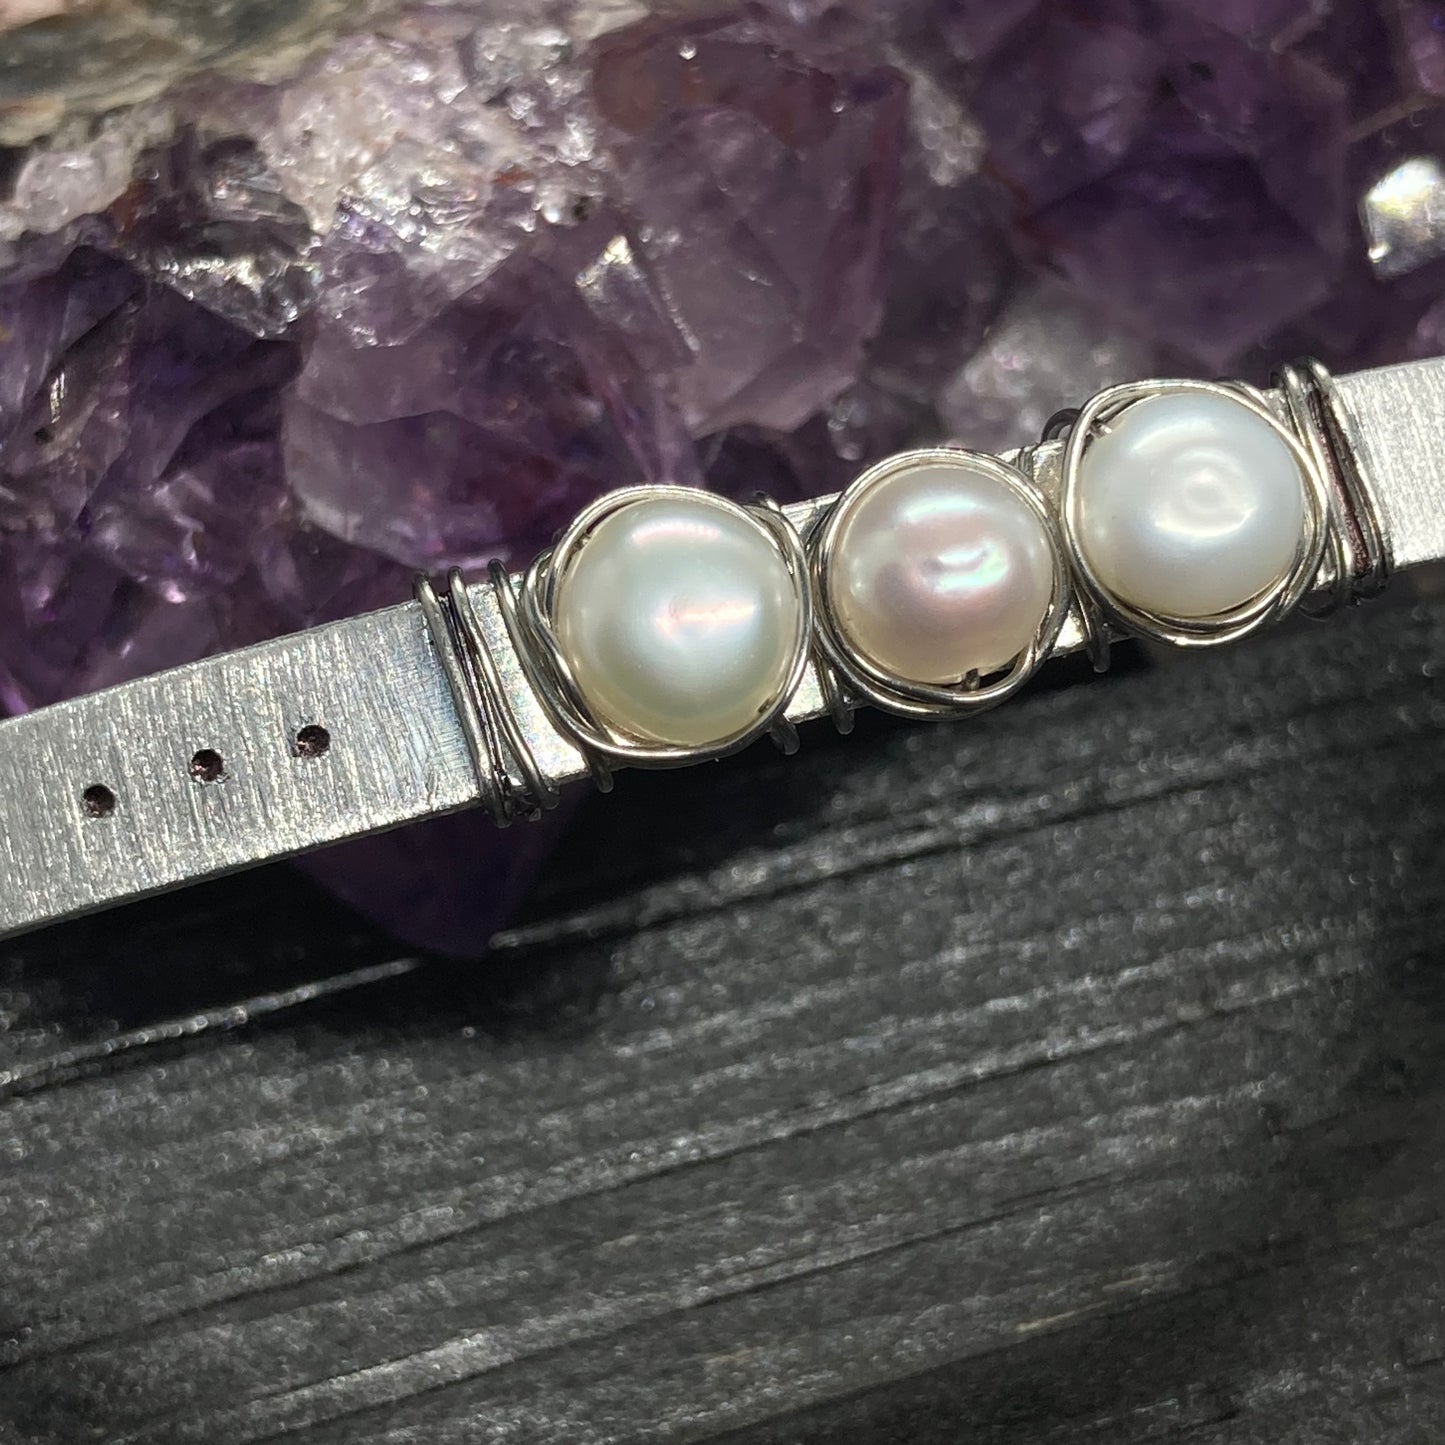 3 Pearl Bracelet